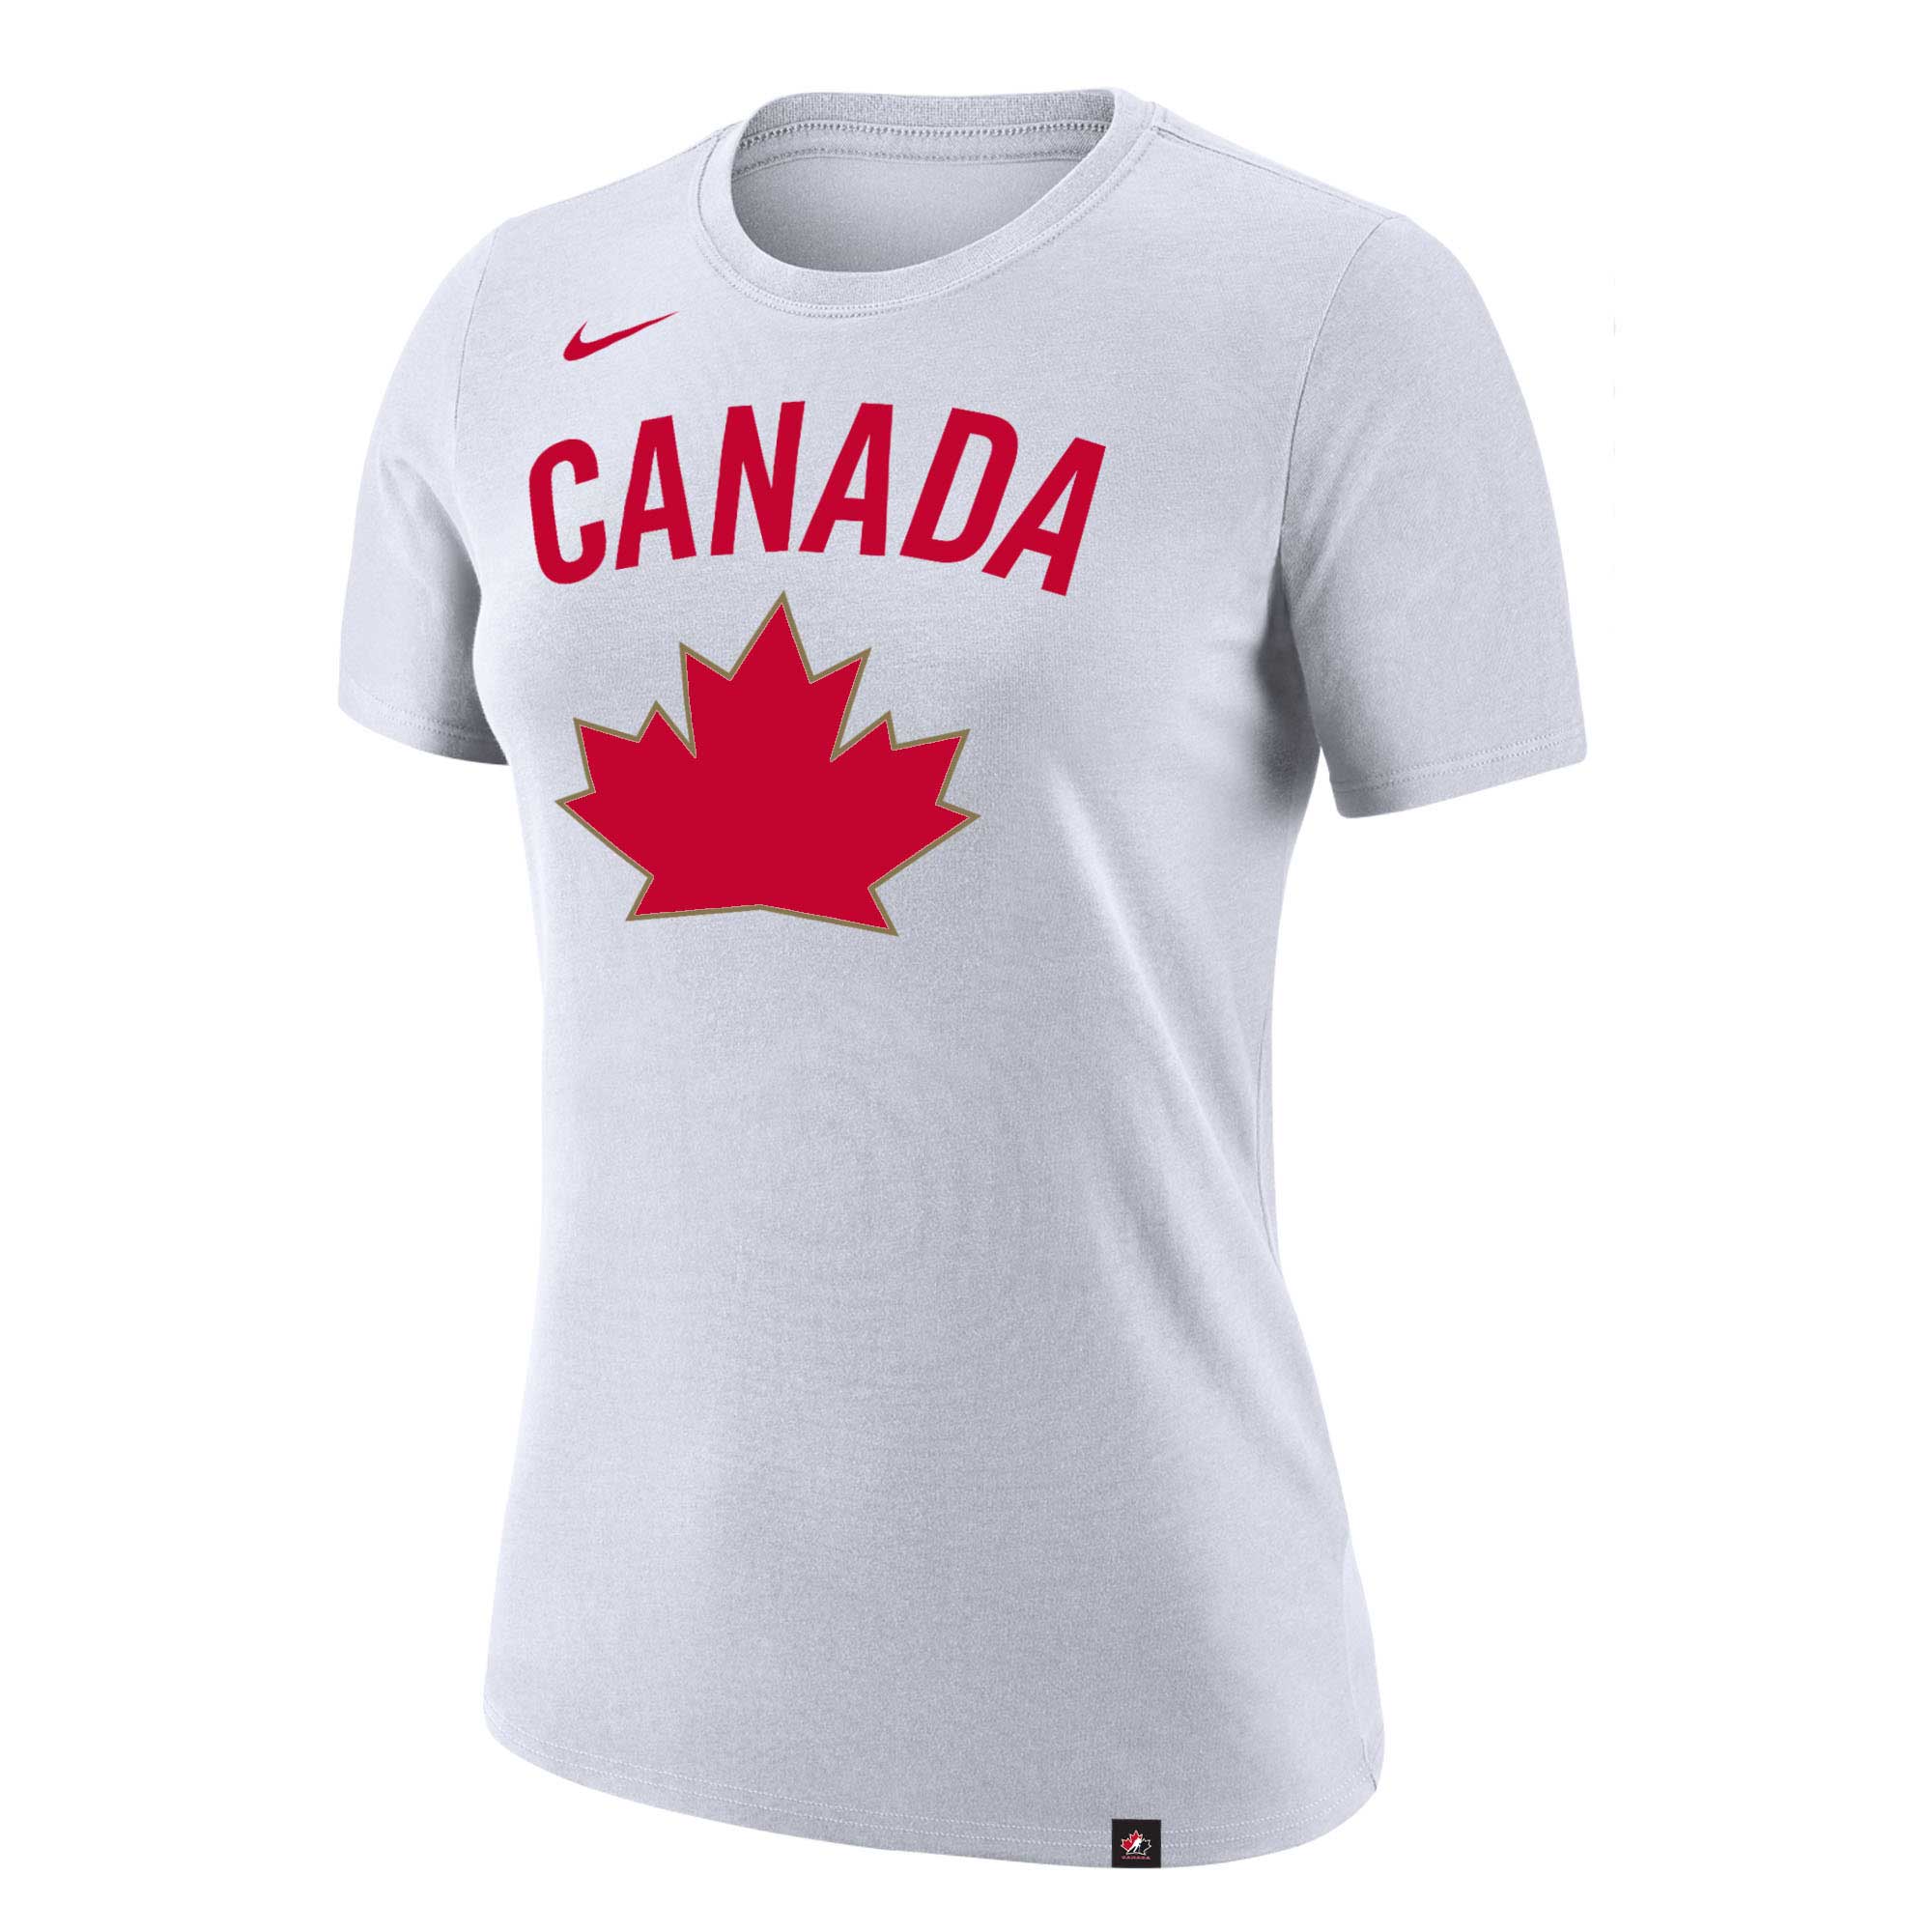 Sportswear T Shirt -  Canada